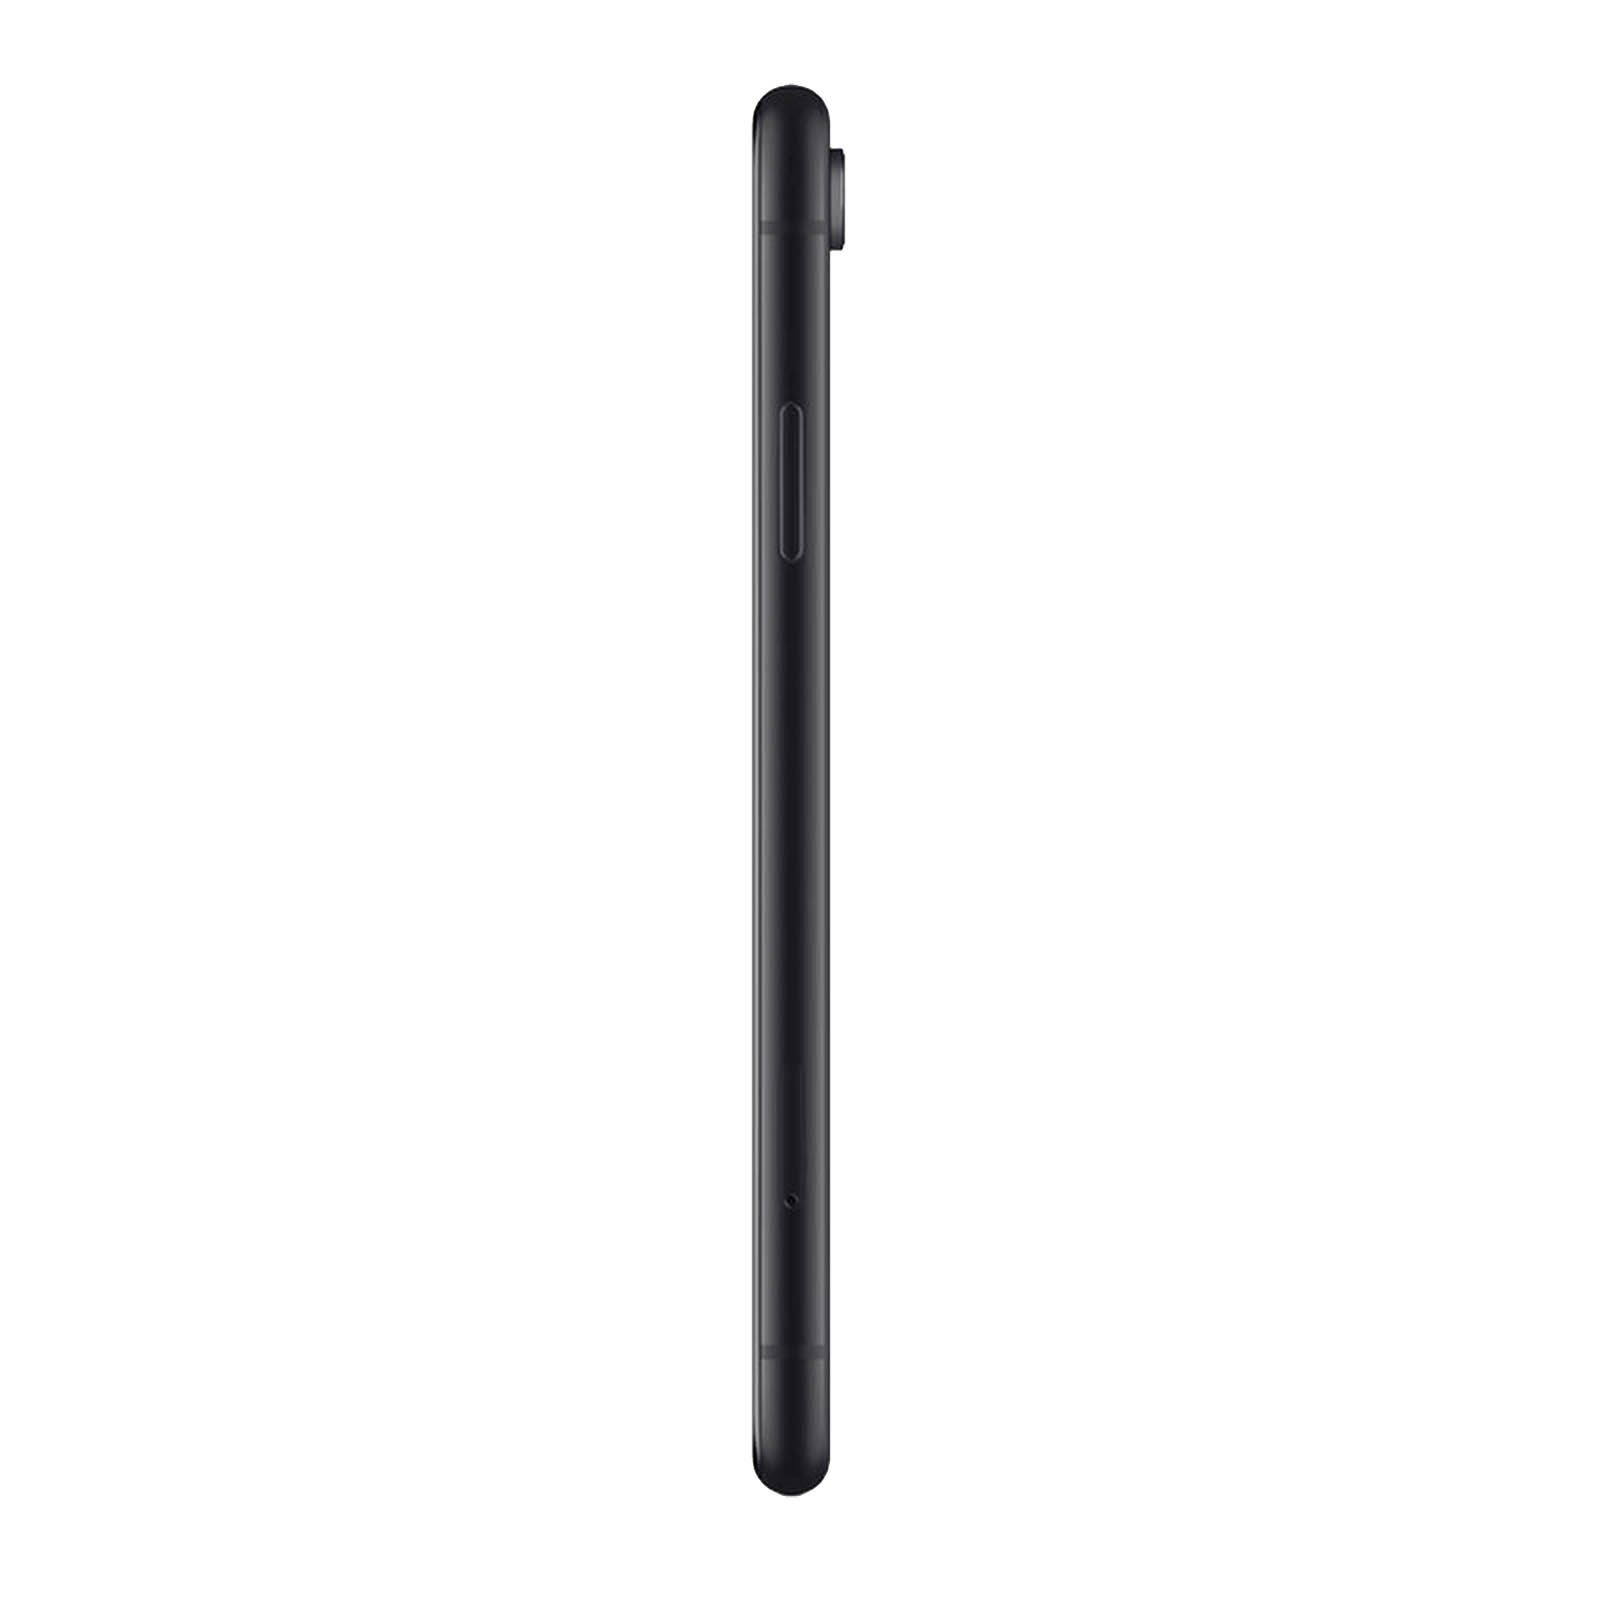 Apple iPhone XR 256GB Black Very Good - Unlocked